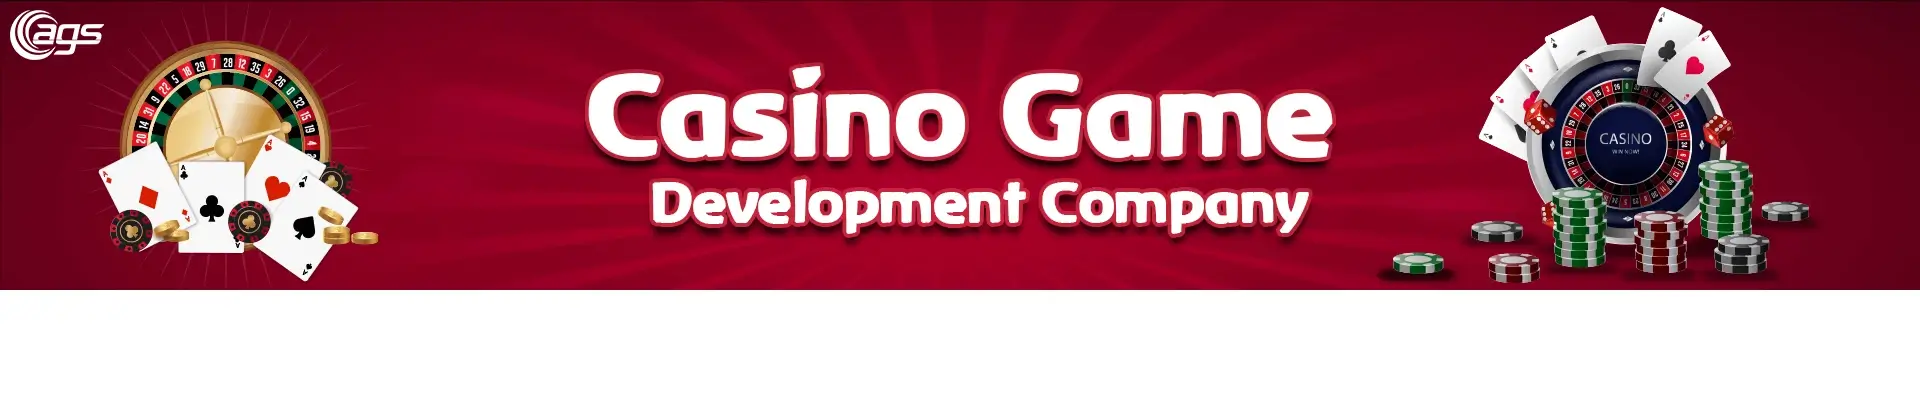 Best Casino Game Development Company | Hire Casino Game Developers